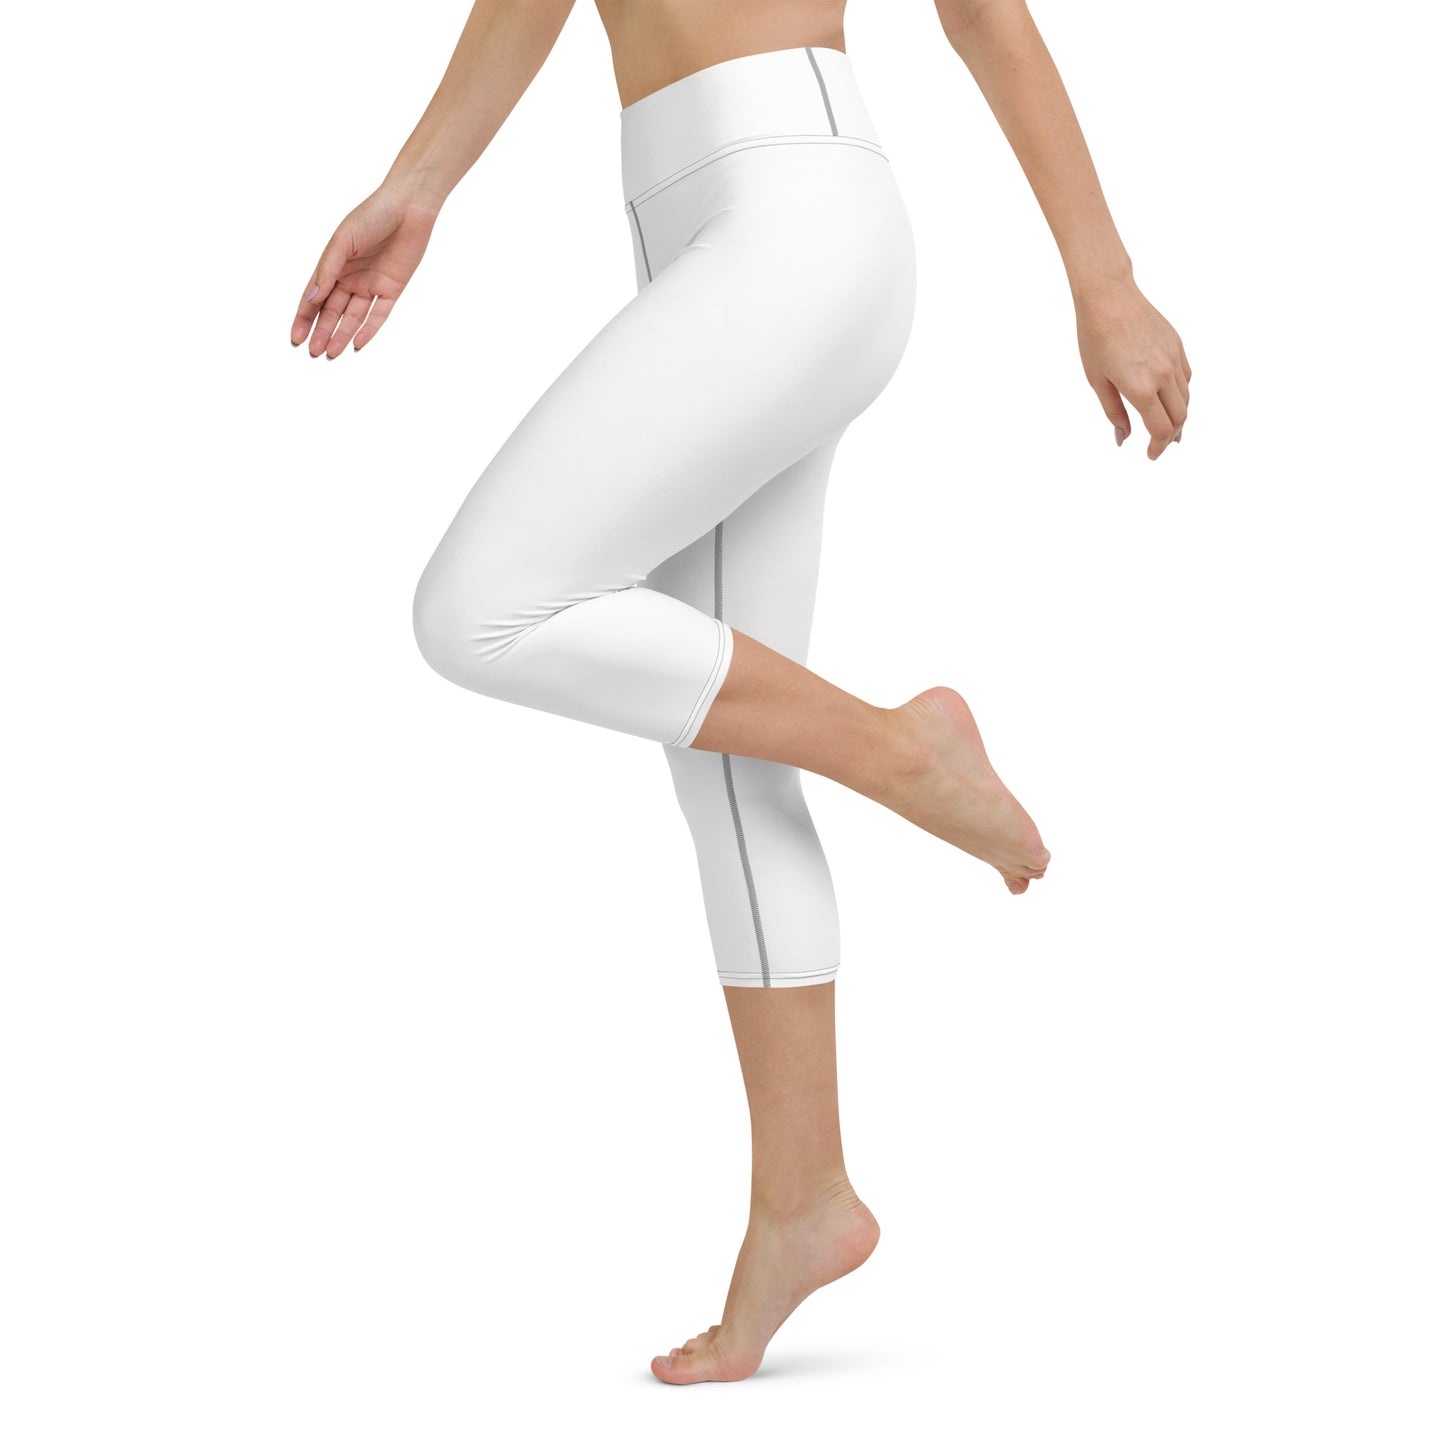 FN WOMEN'S SPORTS: Unamerican Yoga Capri Leggings (white/black)